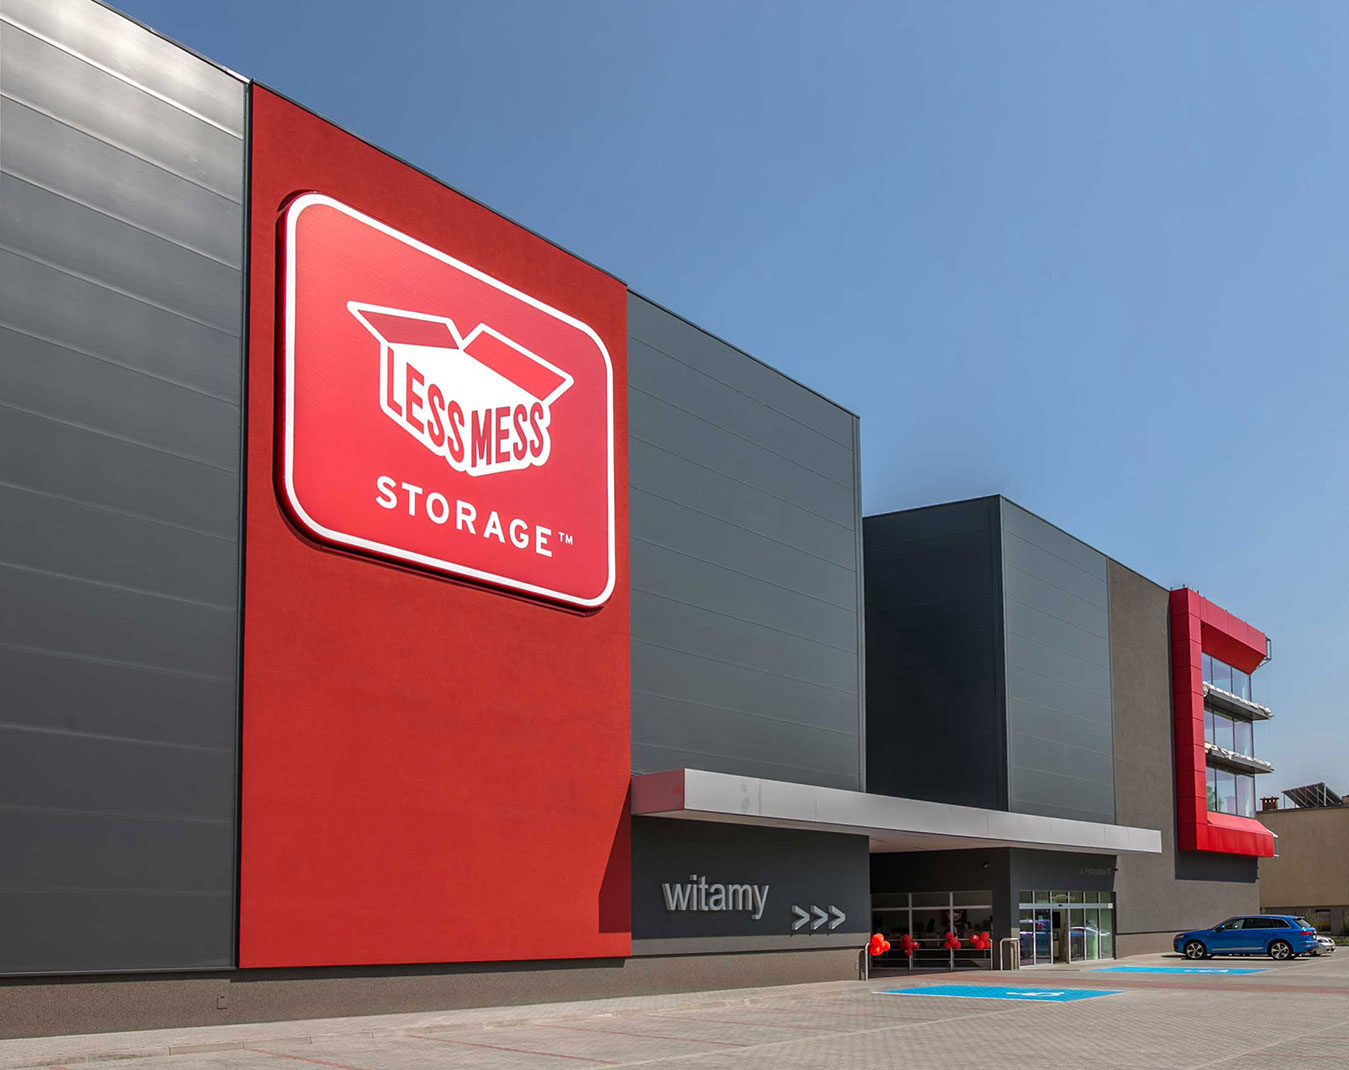 Self-storage chain brand identity – Less Mess Storage